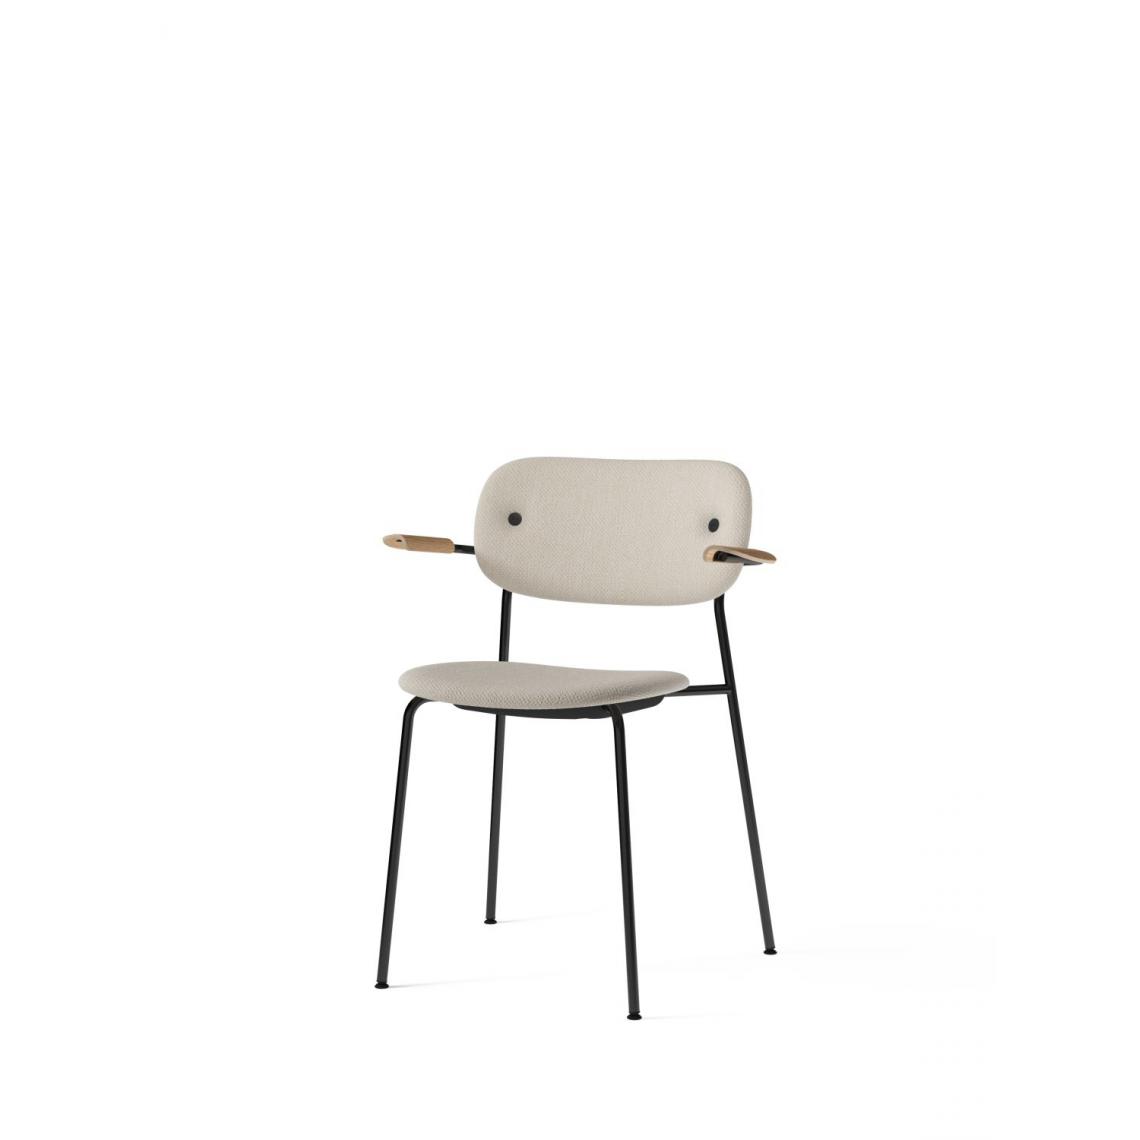 Menu - Co Dining Chair avec accoudoir - noir - MenuCoChairDoppiopanama004 - chêne, naturel - Chaises